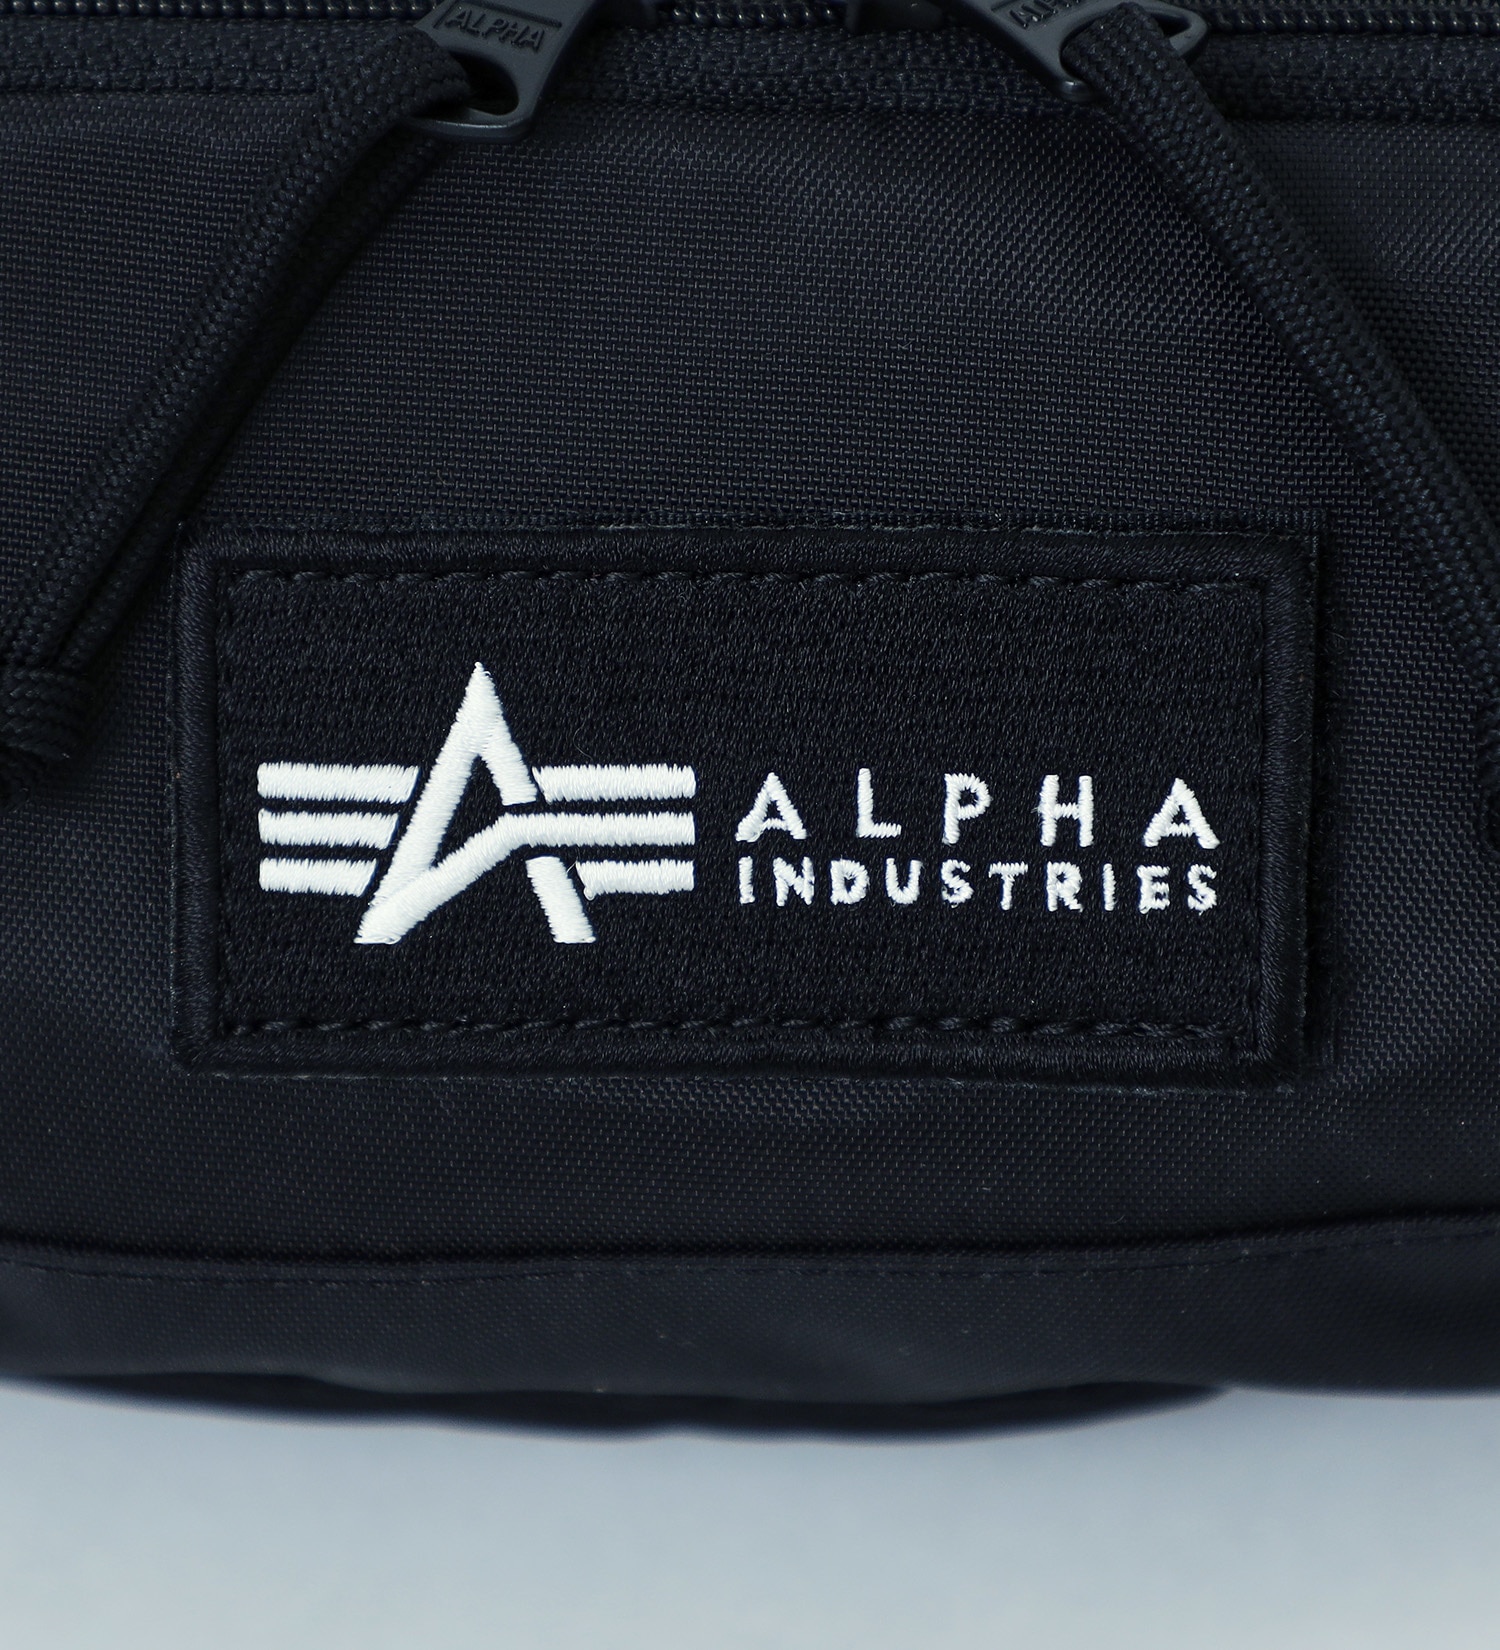 ALPHA(アルファ)のウエストバッグ|バッグ/ボディバッグ/ウェストポーチ/メンズ|ブラック